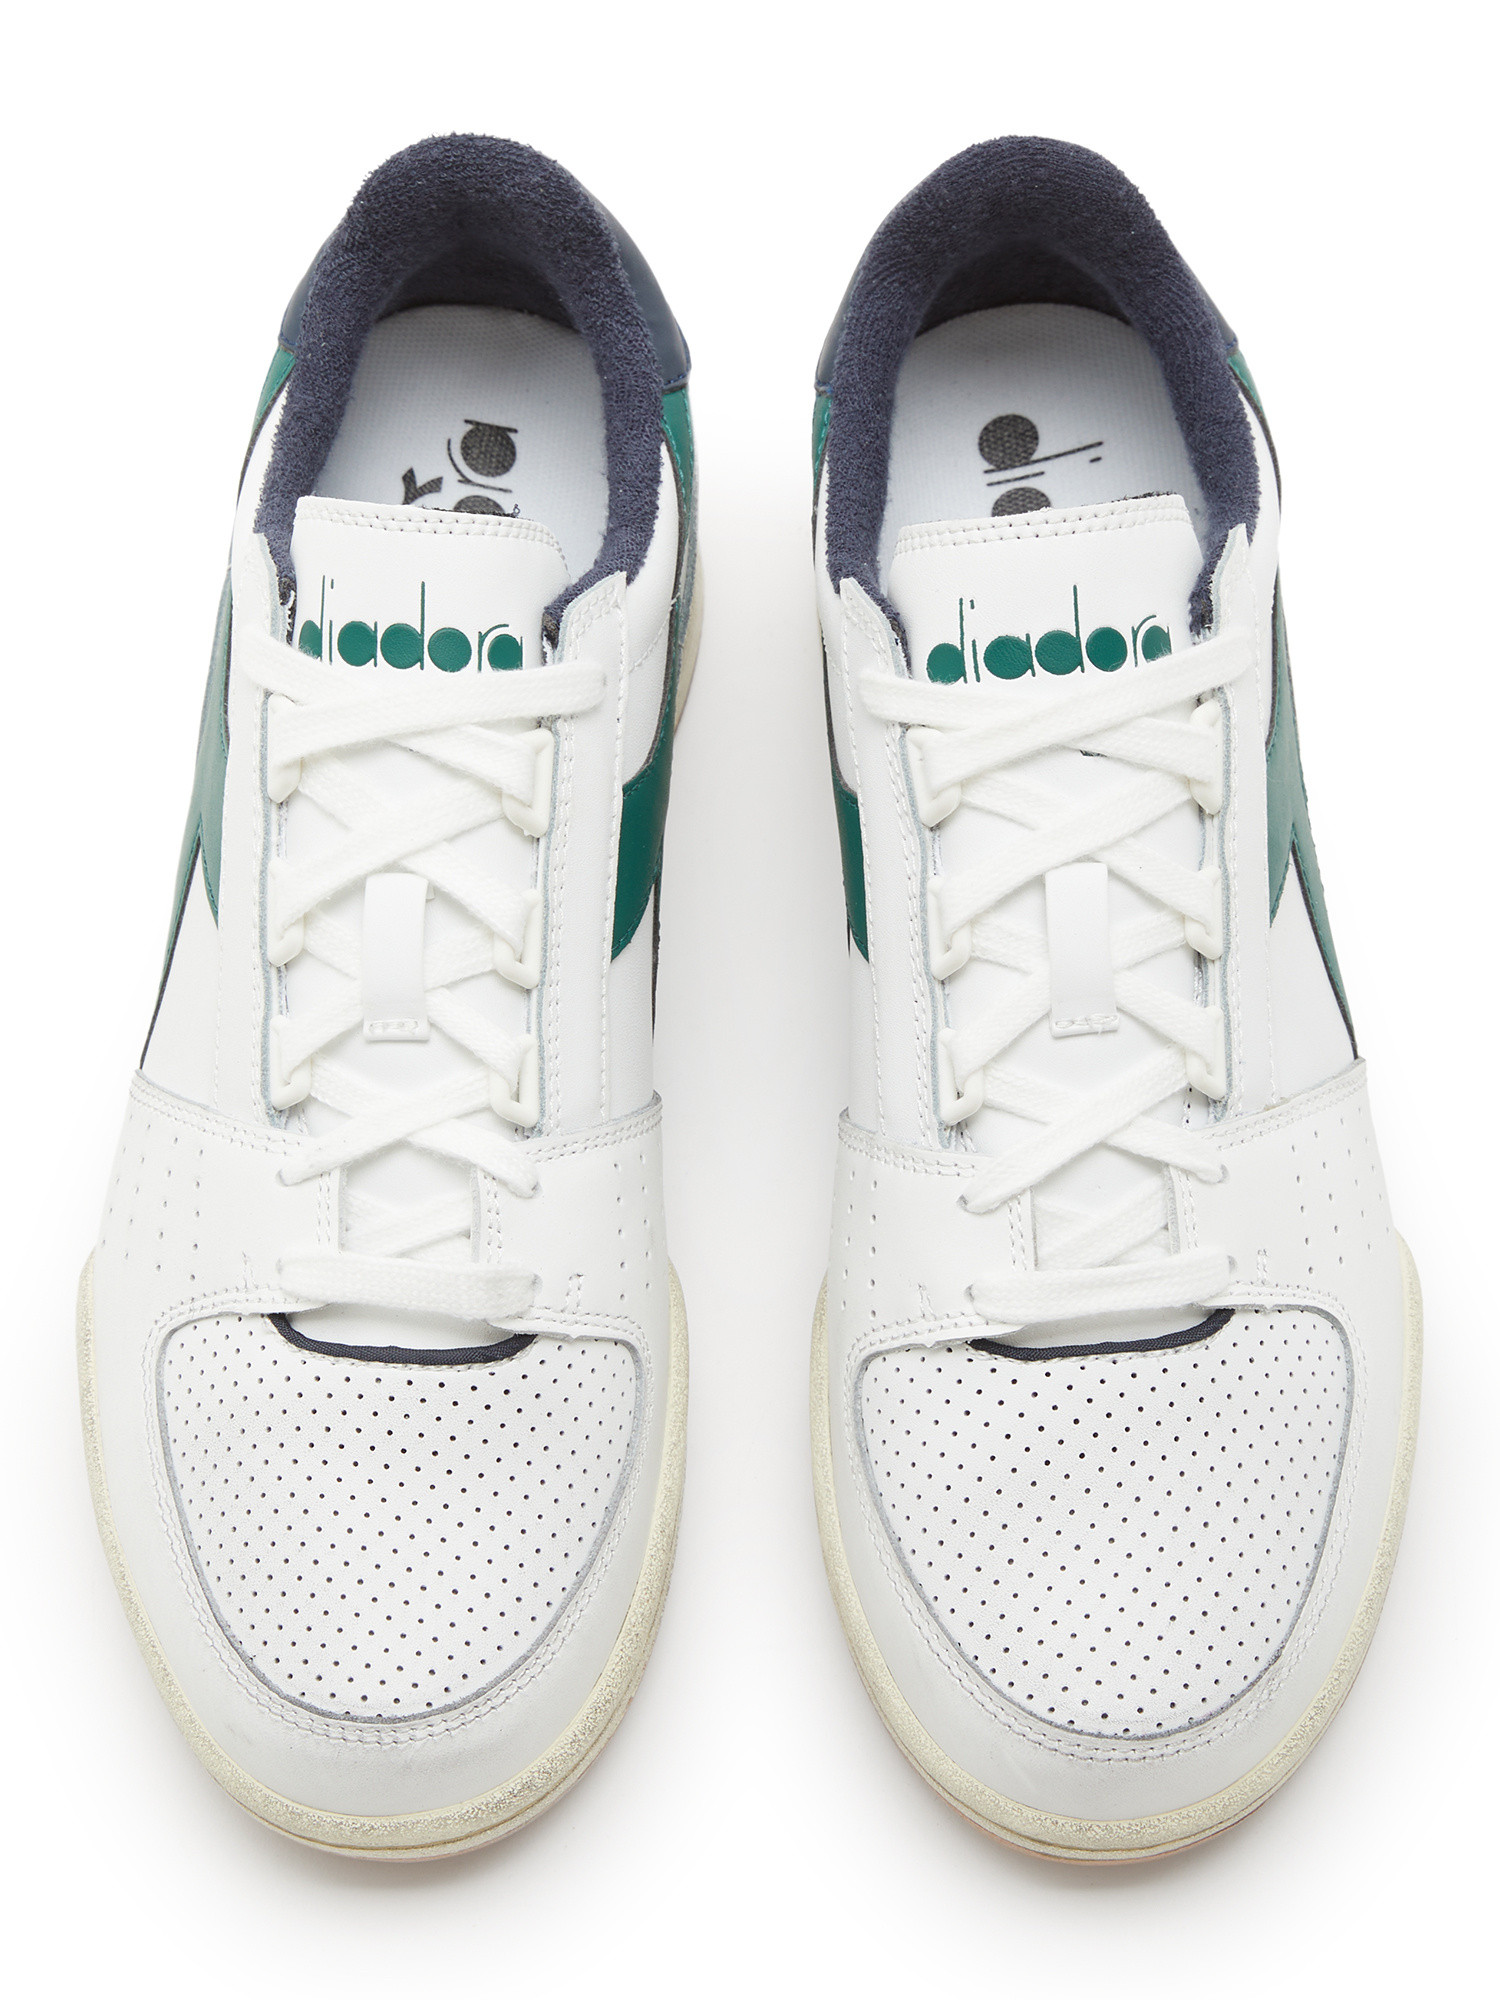 Diadora - Davis Leather Shoes, White, large image number 2